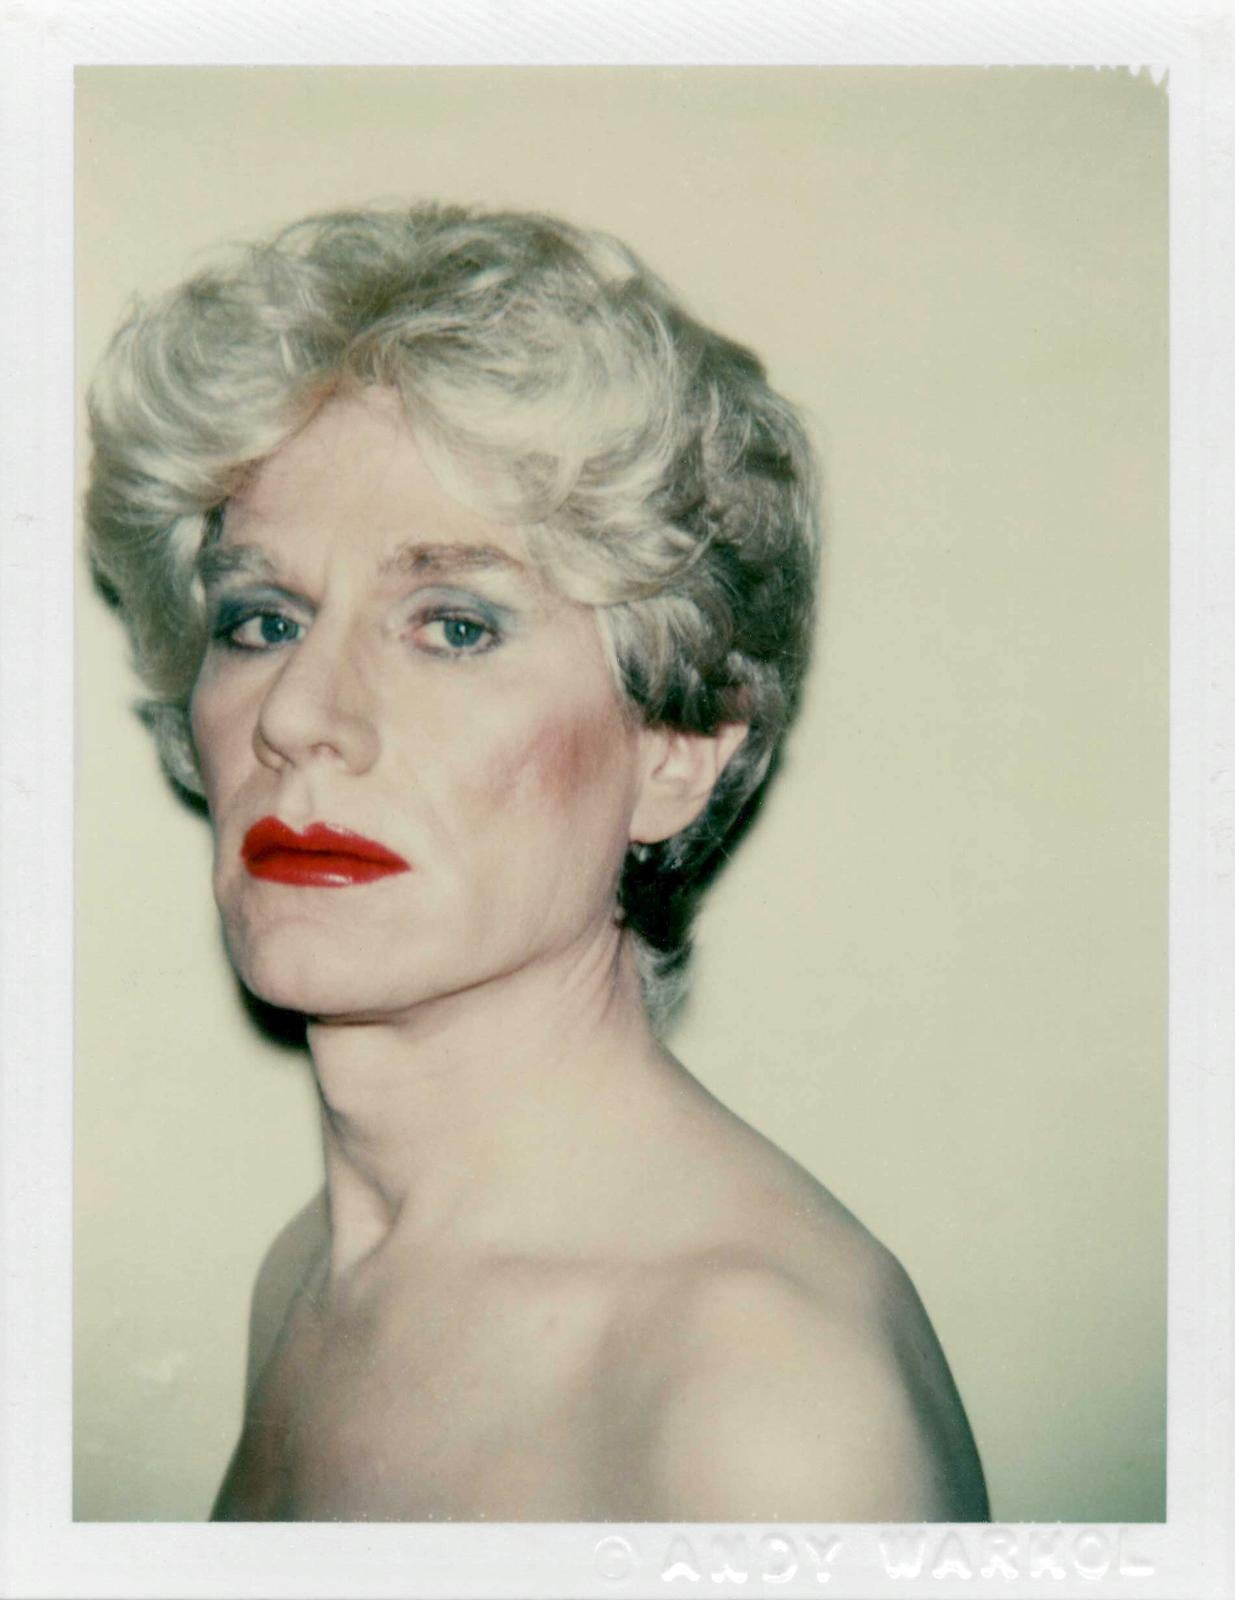 Andy Warhol Portrait Photograph - Self-Portrait in Drag